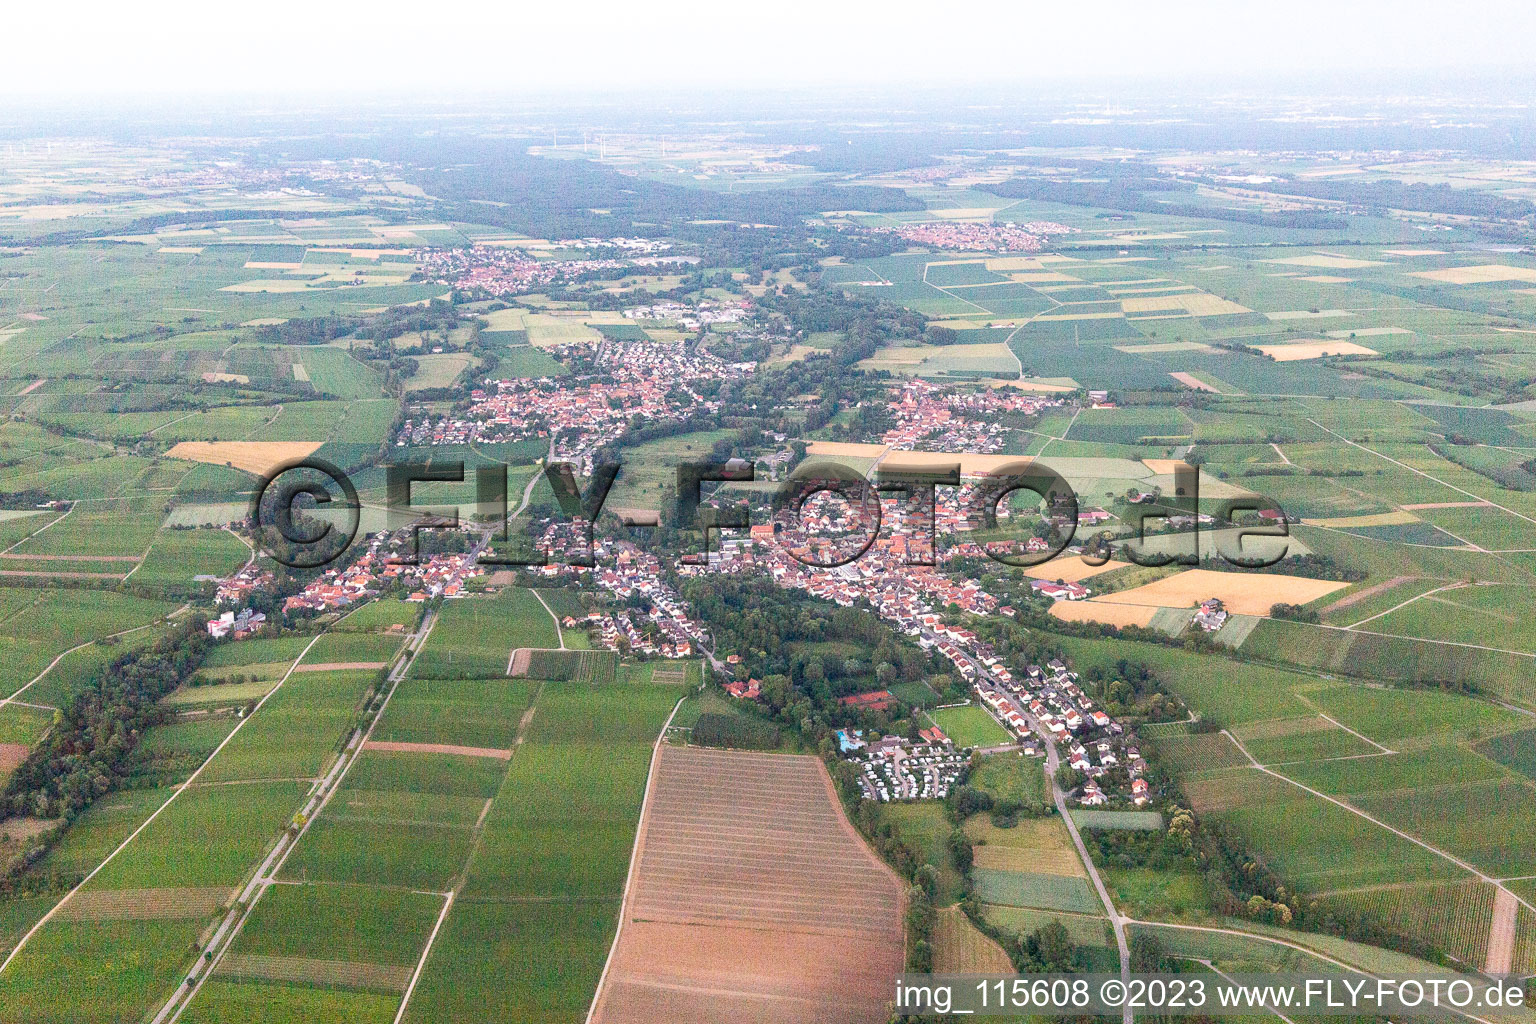 District Billigheim in Billigheim-Ingenheim in the state Rhineland-Palatinate, Germany seen from a drone